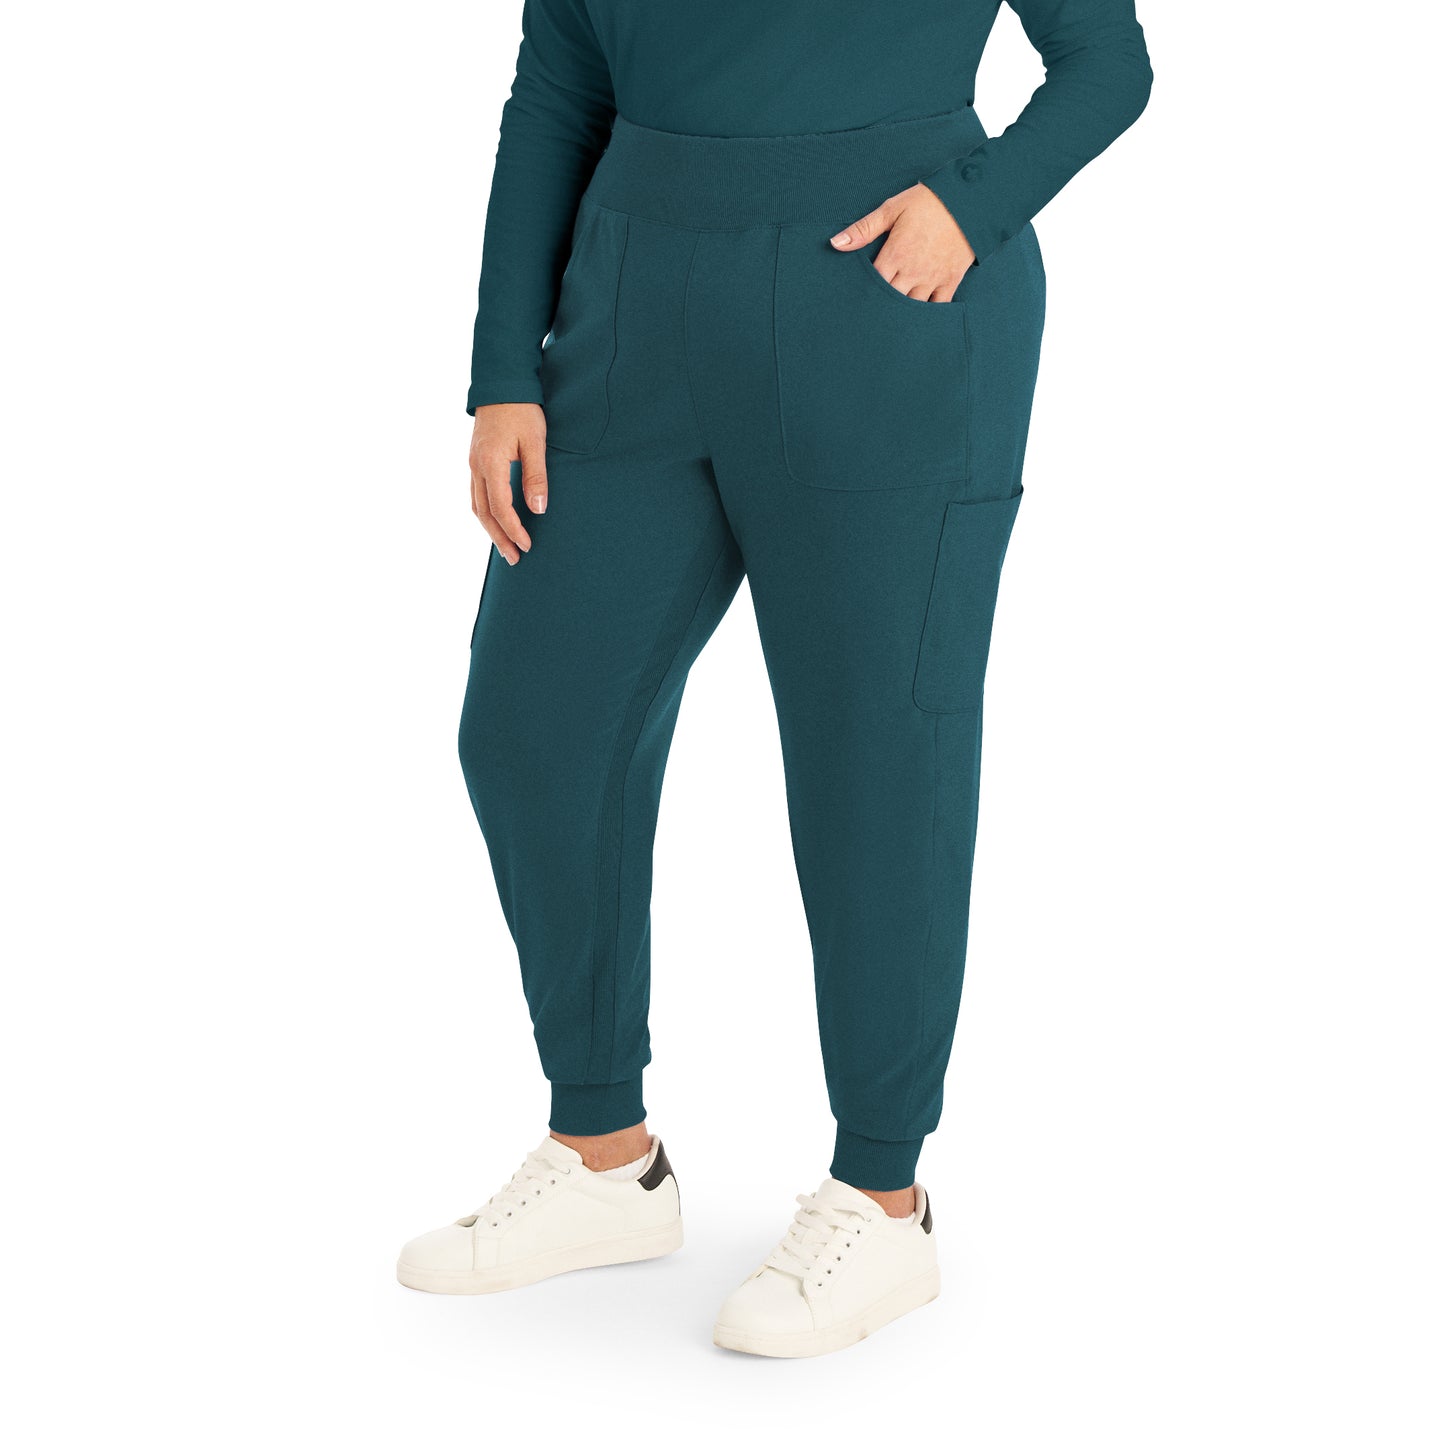 Pantalon femme jogger - FORWARD - L401 Régulier